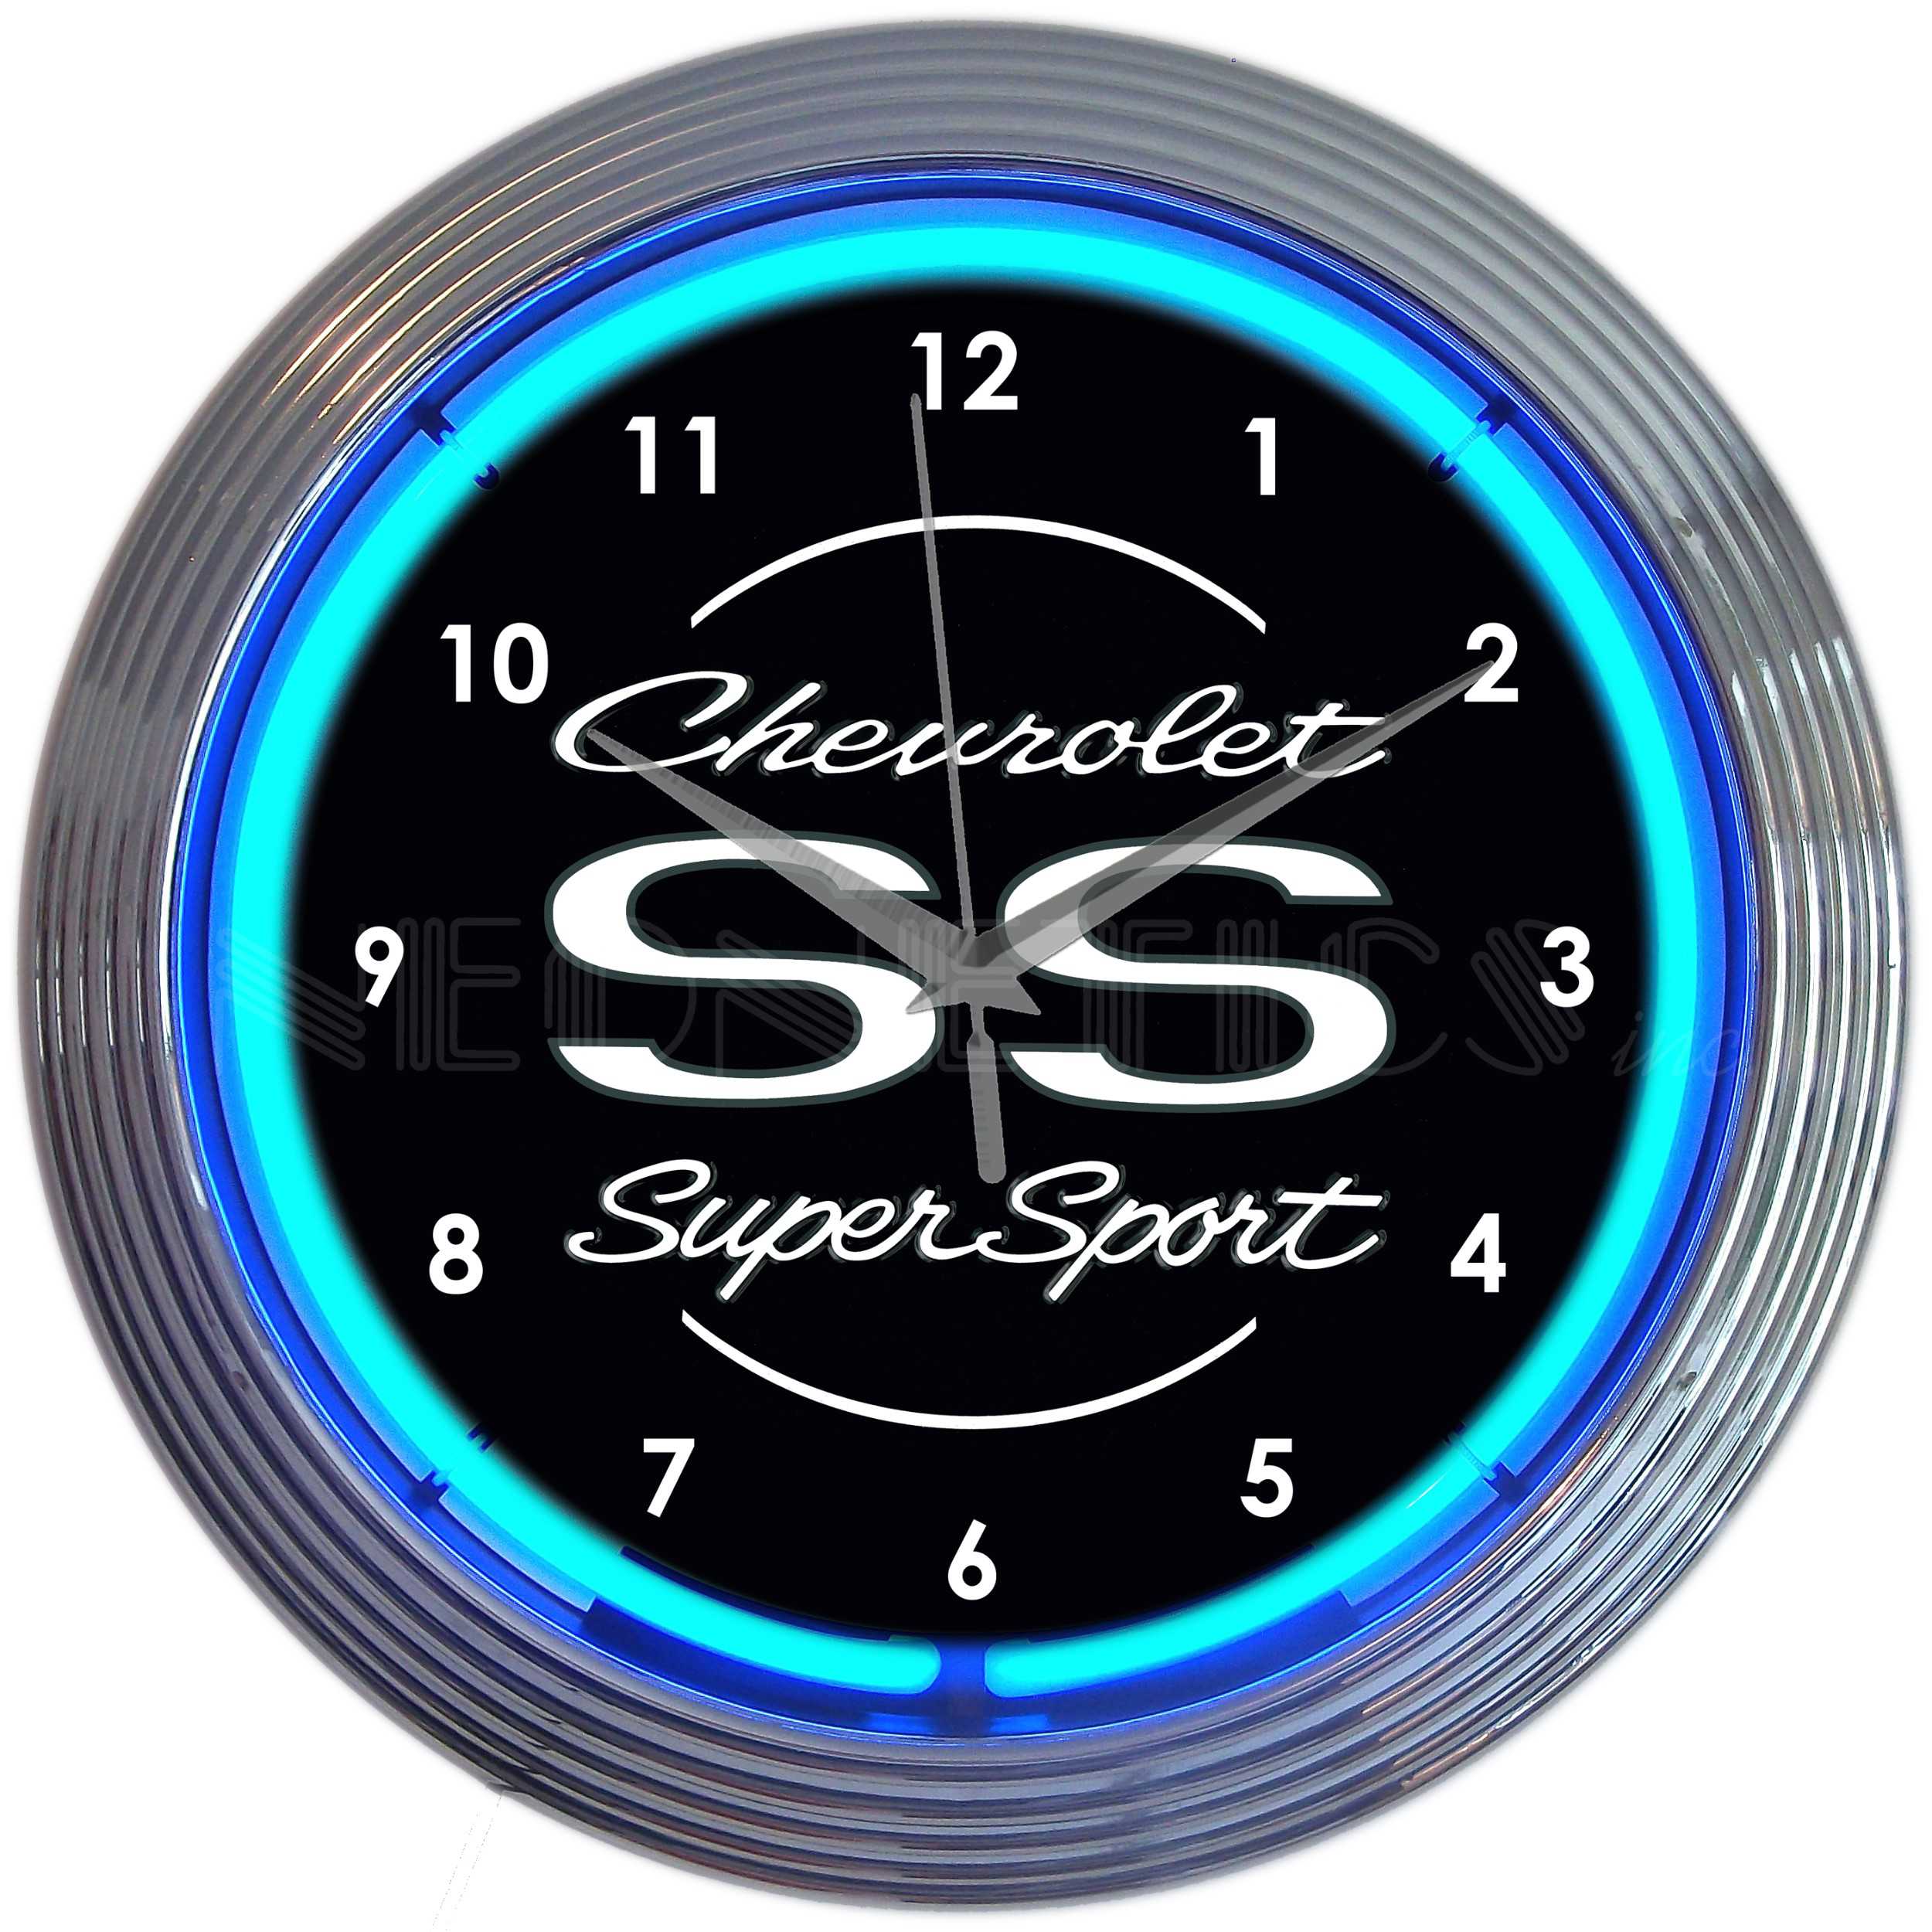 CHEVROLET SS SUPER SPORT BLUE NEON CLOCK